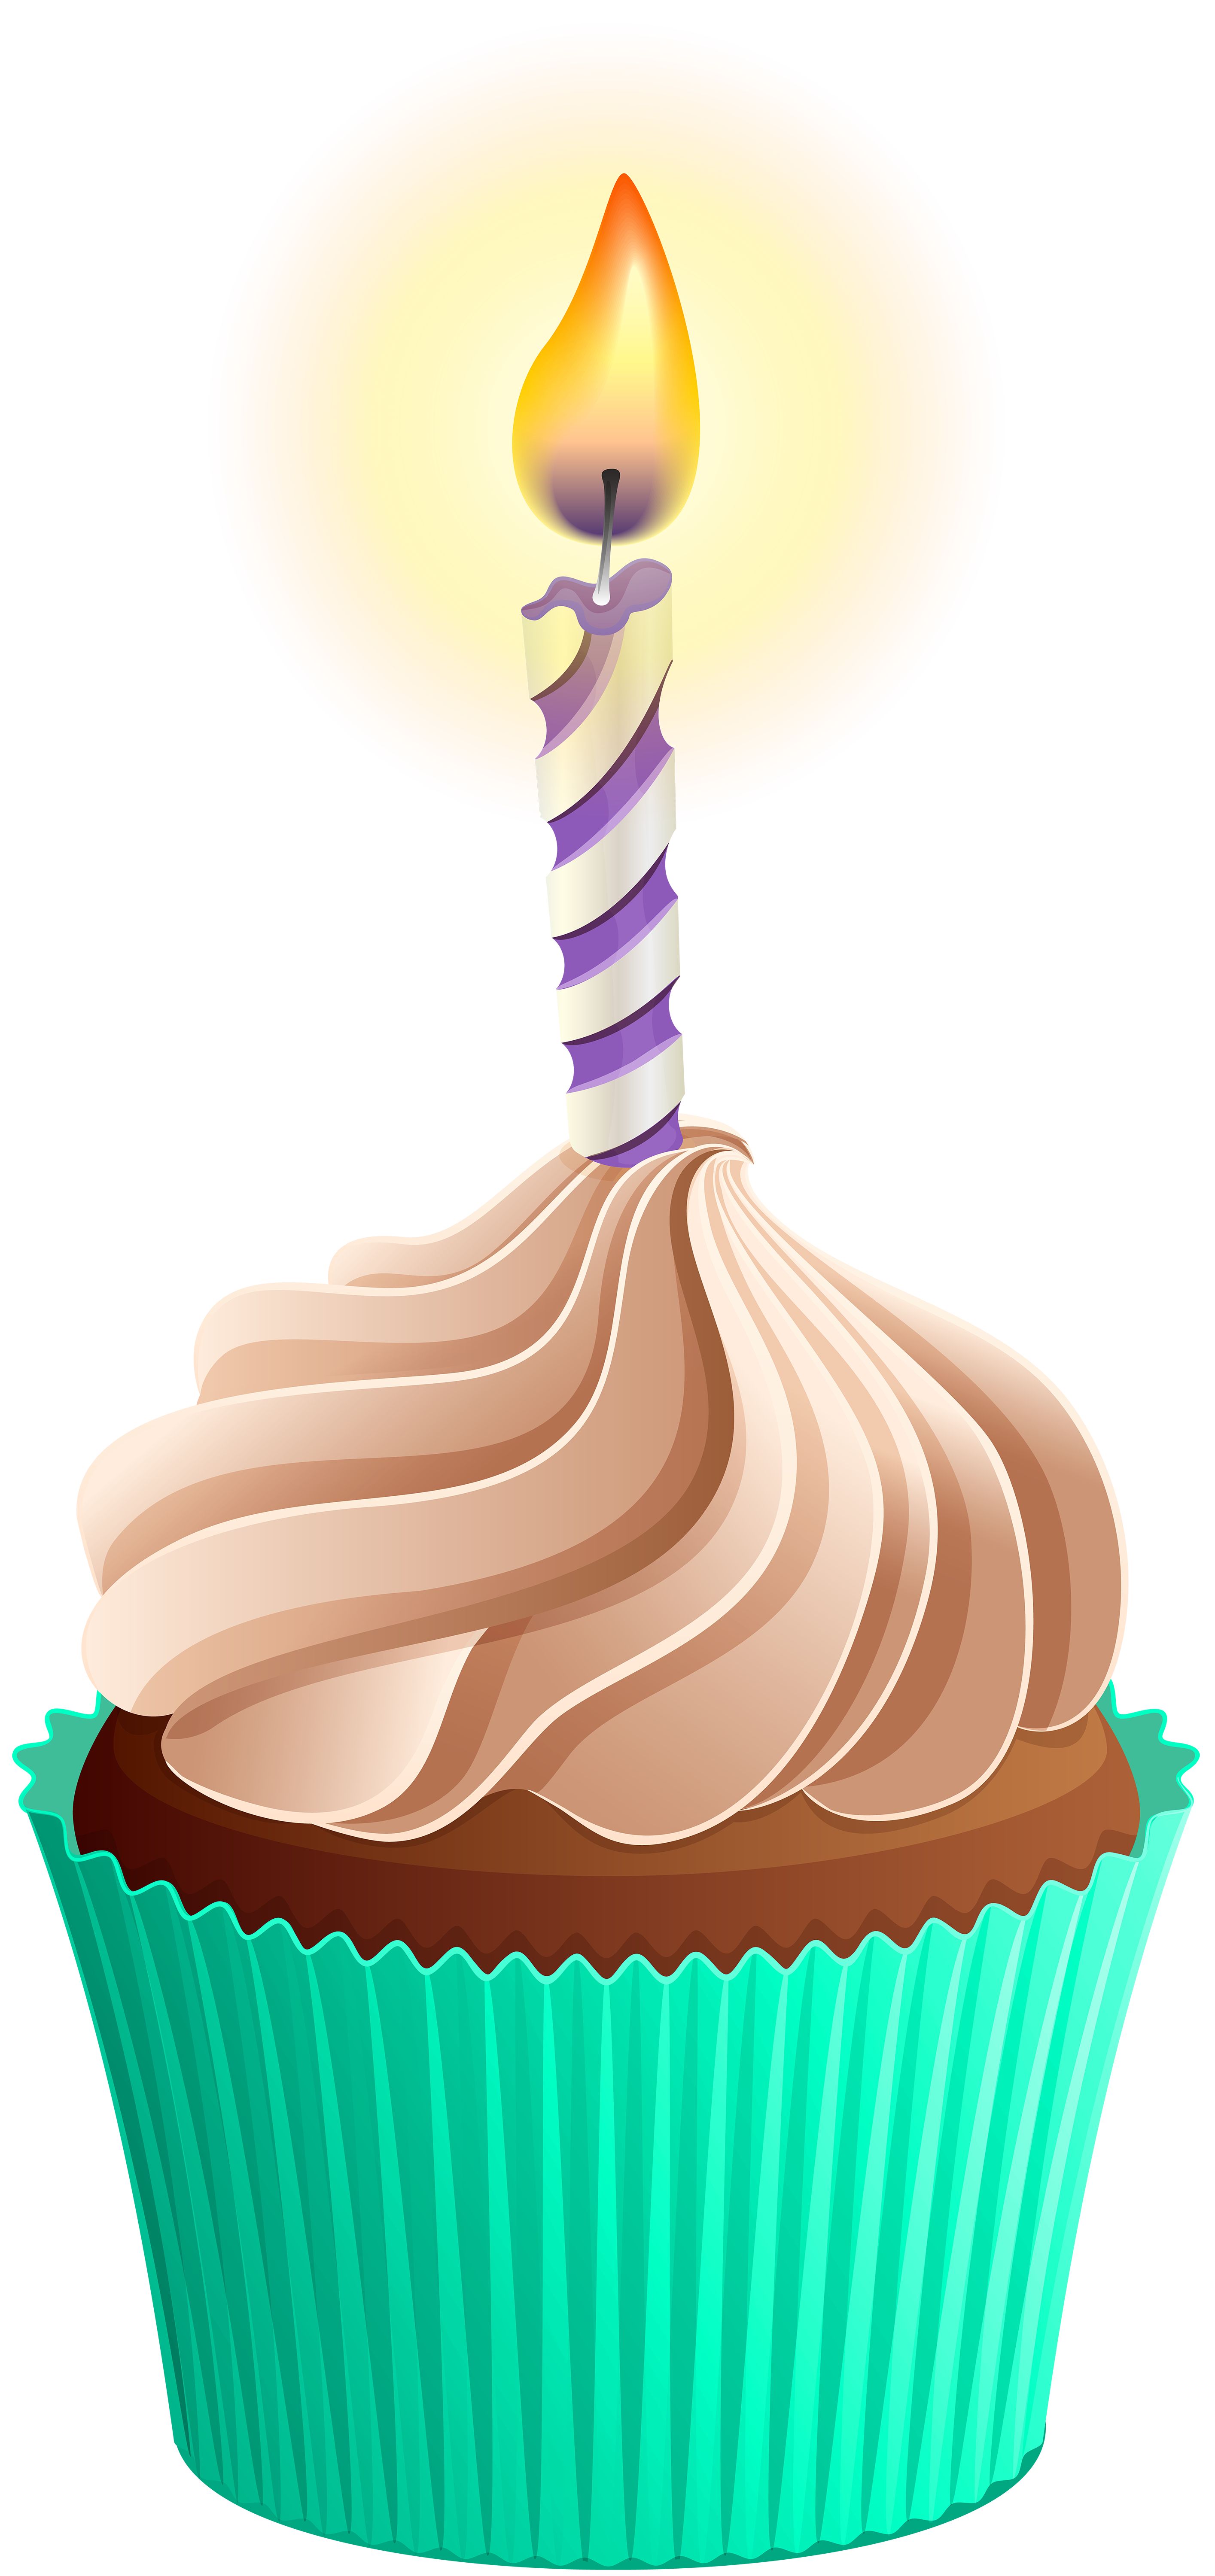 Birthday Cupcake PNG Clip Art Image​